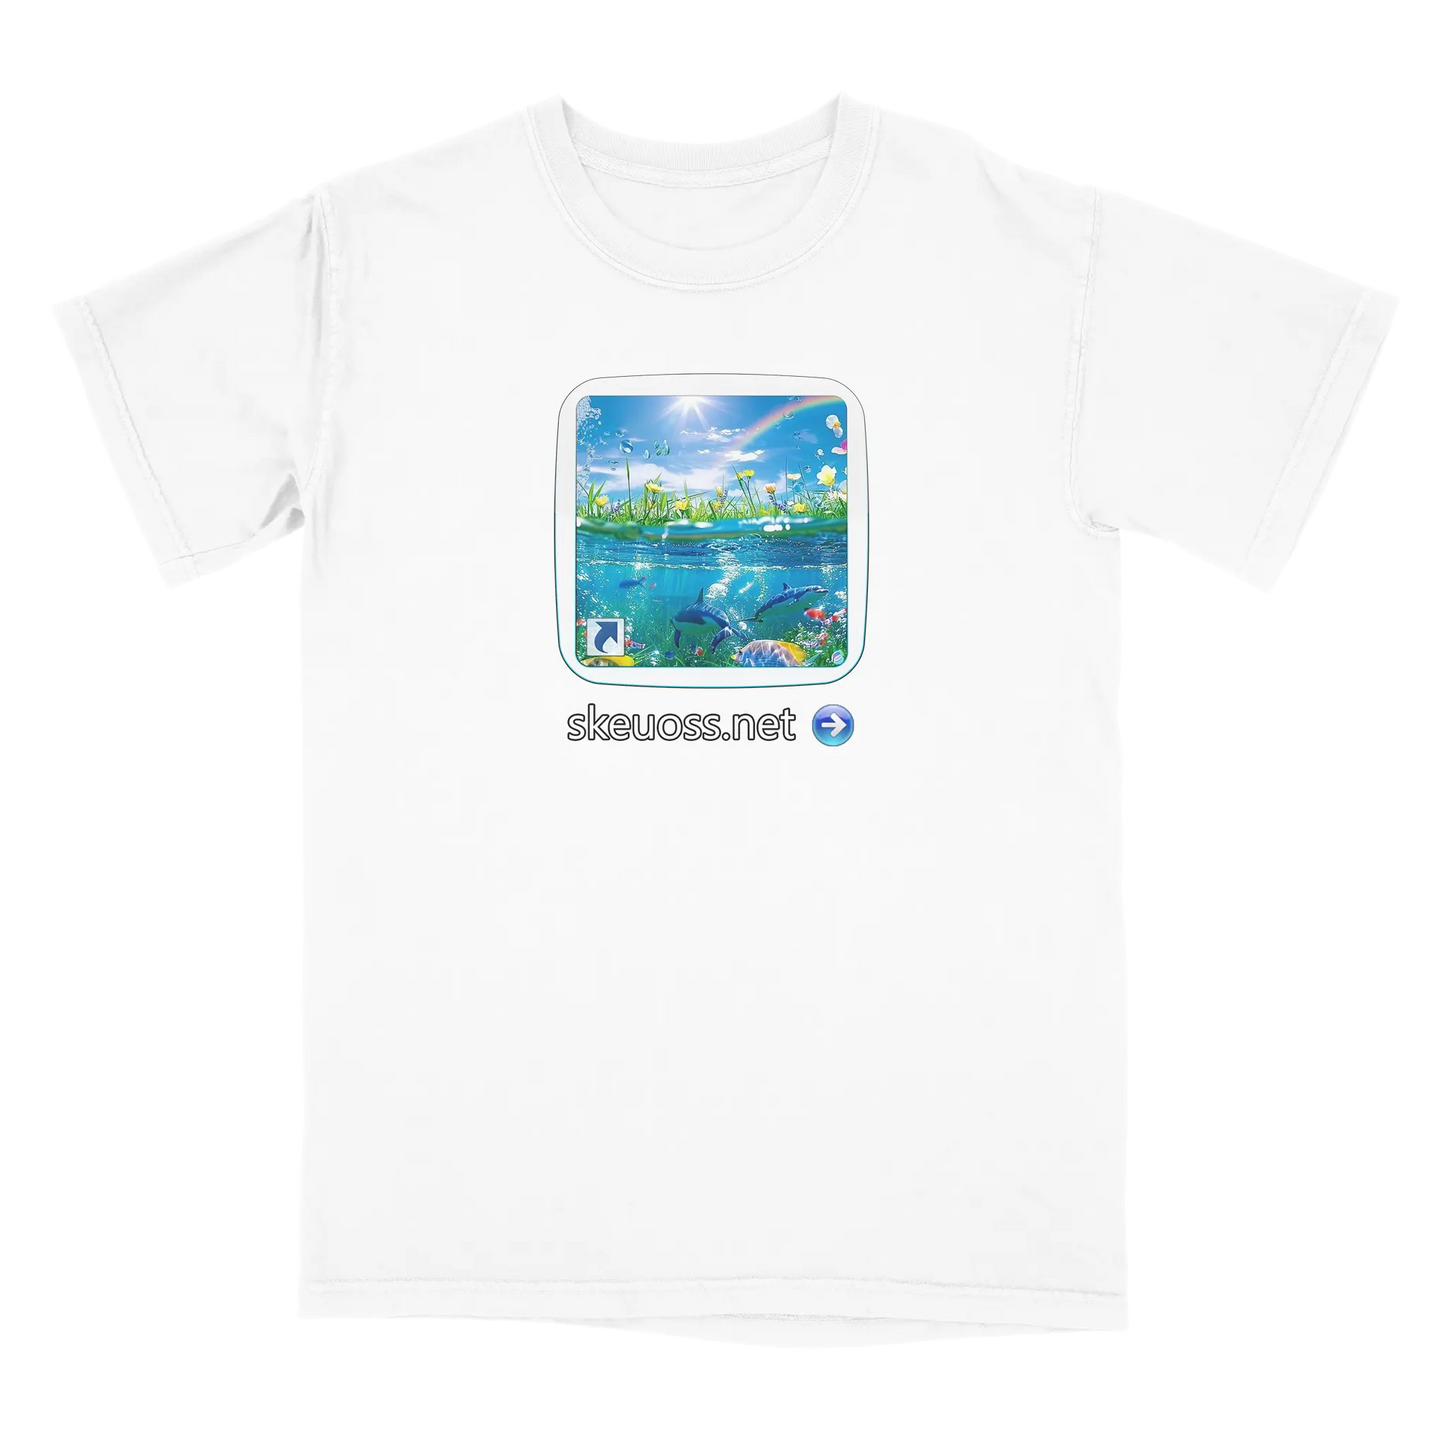 Frutiger Aero T-shirt - User Login Collection - User 197